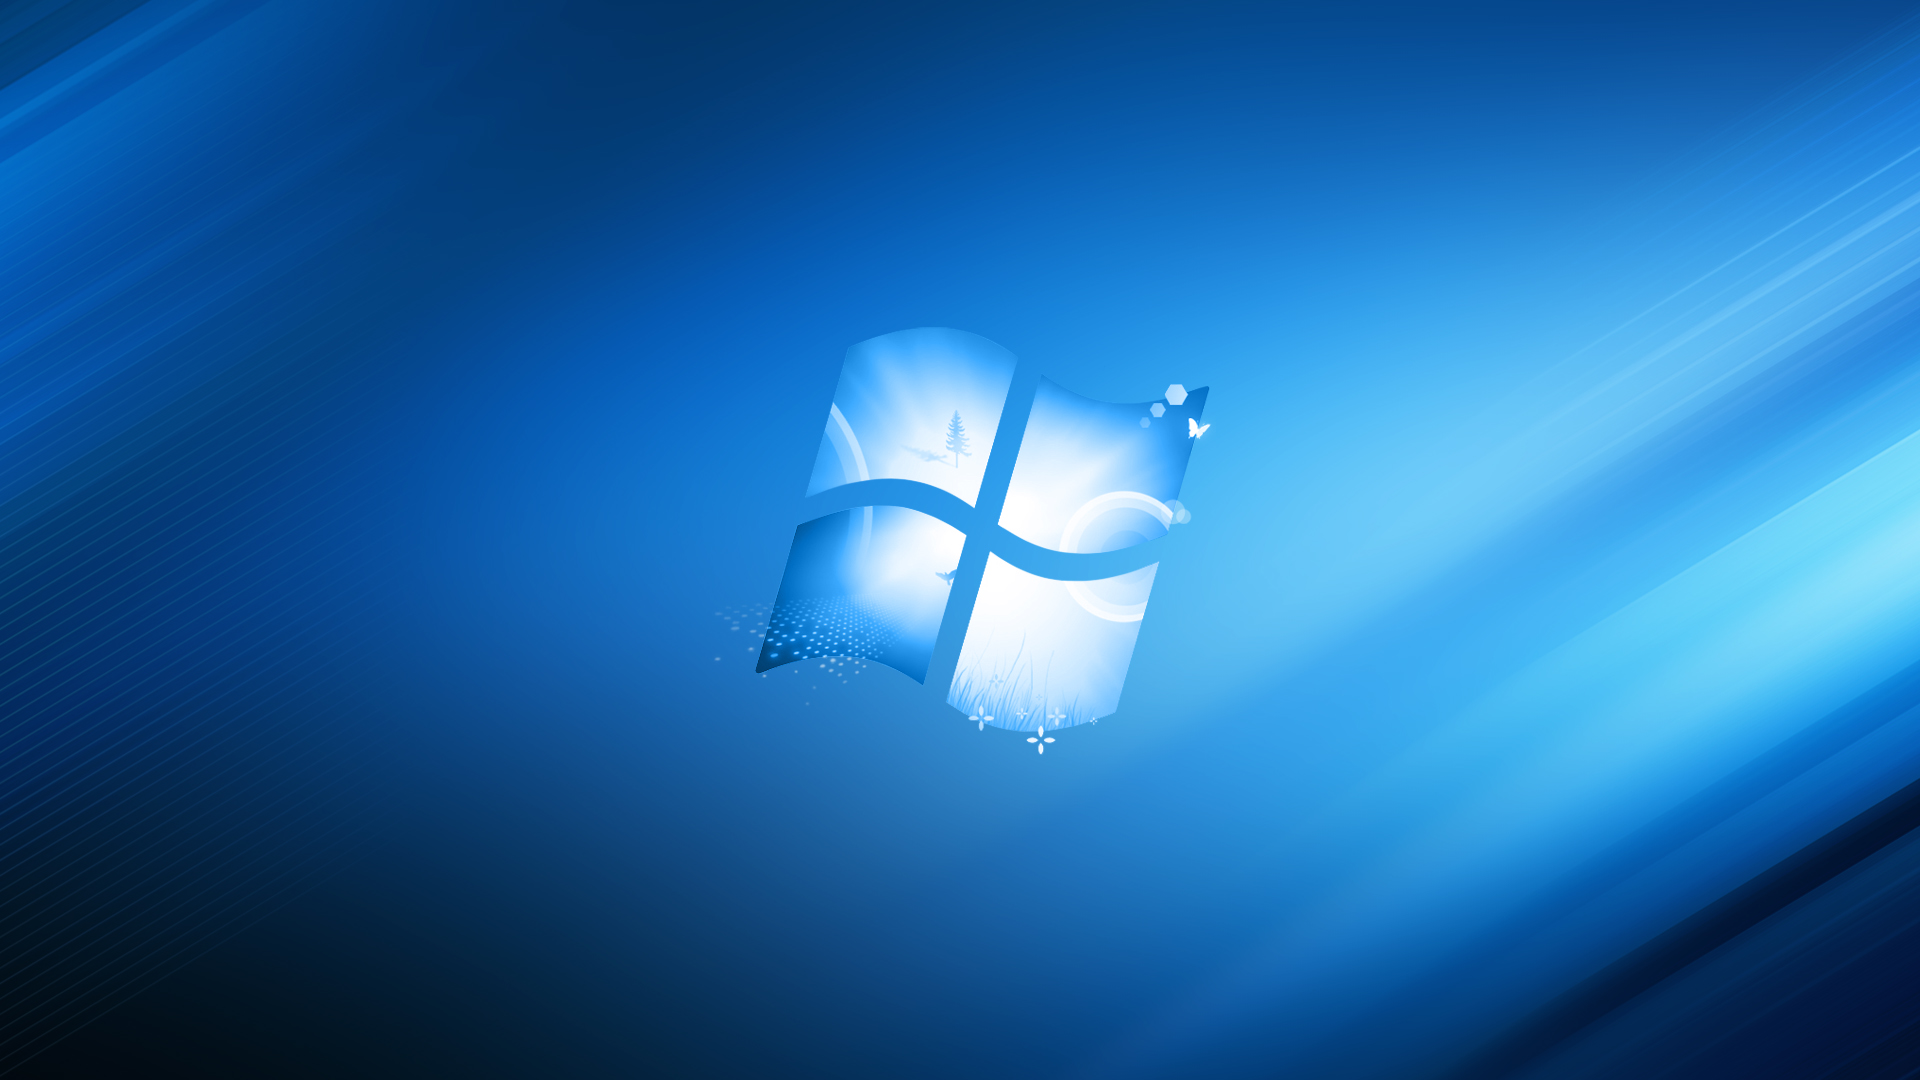 30 Best Top Collection Of Windows 8 Wallpaper   HD Downloads